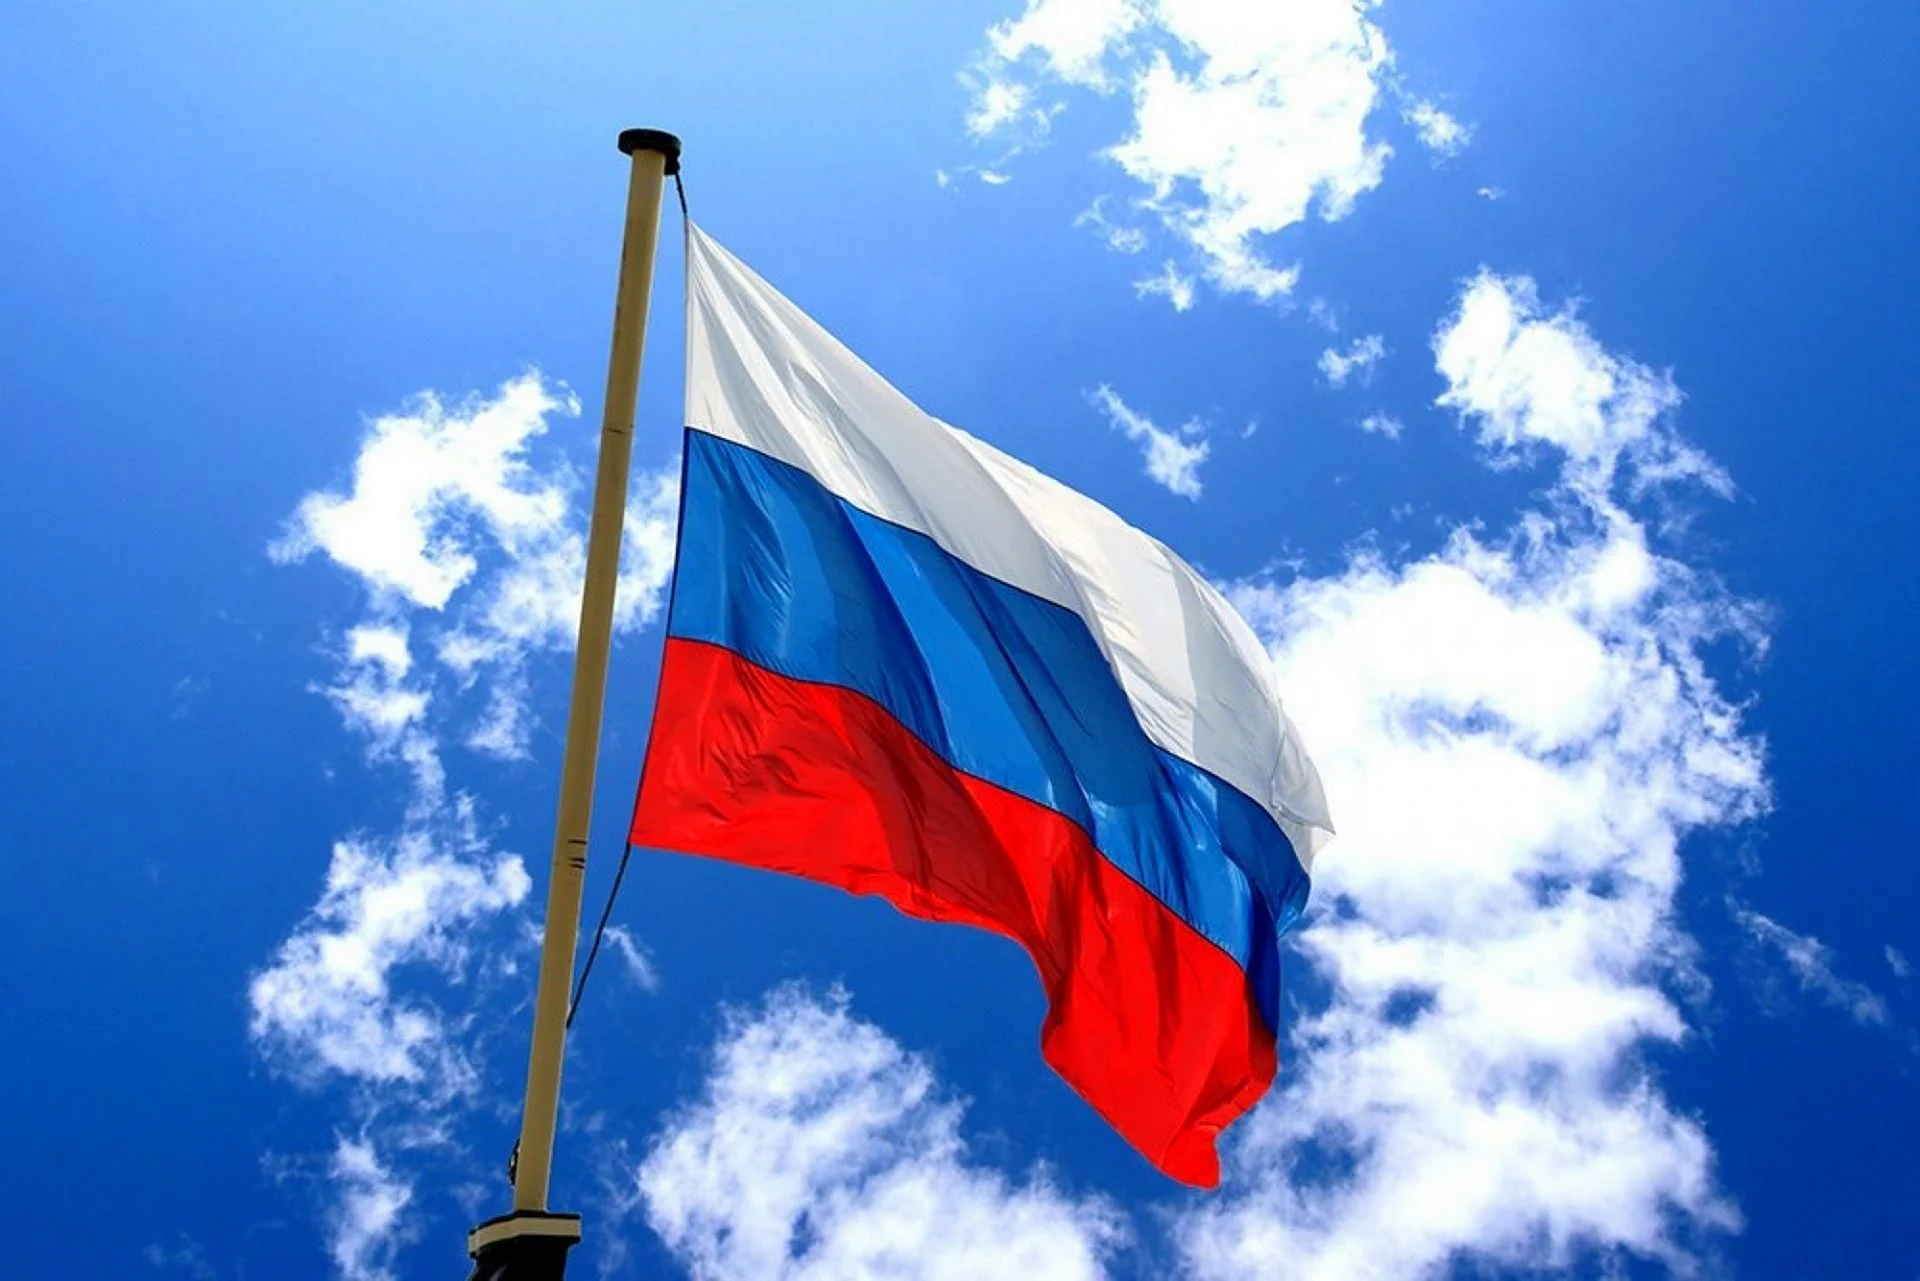 Государственный флаг РФ Триколор